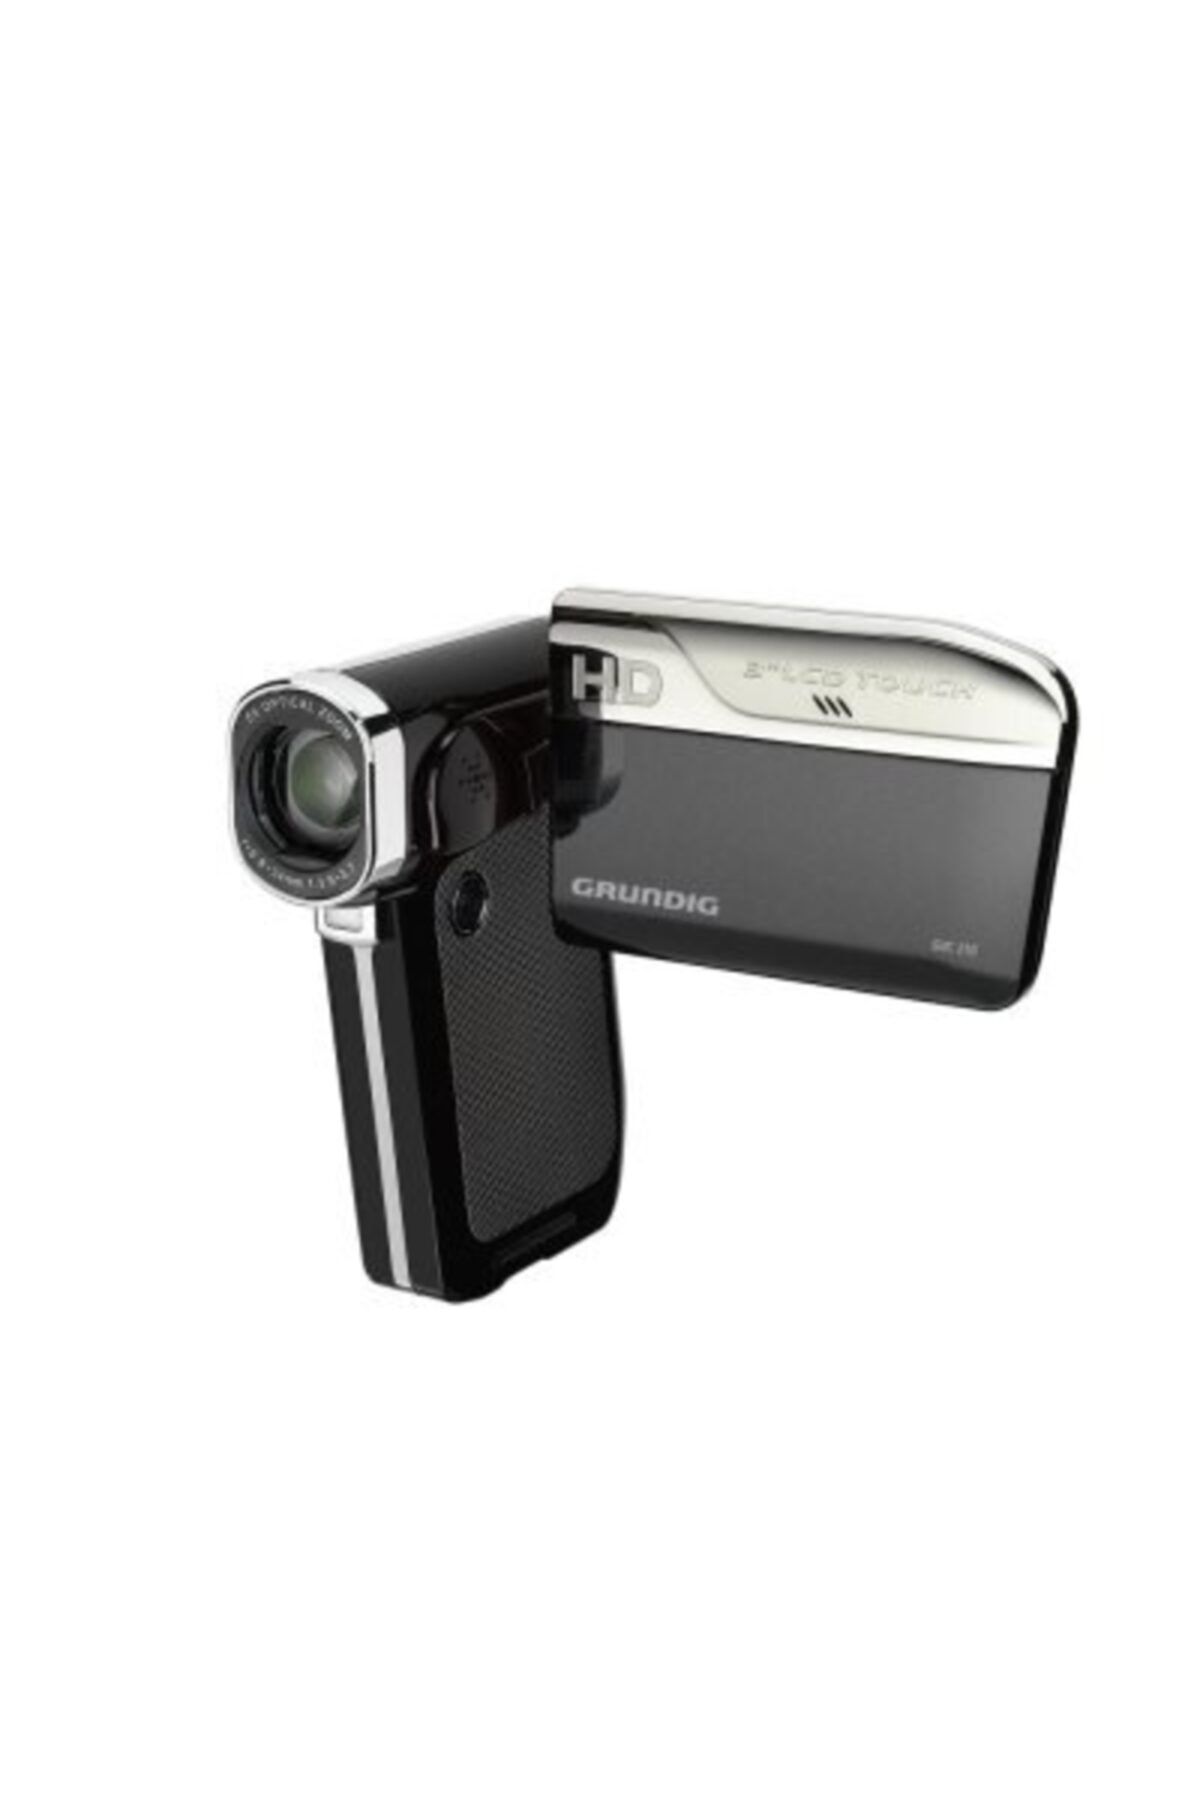 Grundig Gvc 210 Video Kamera